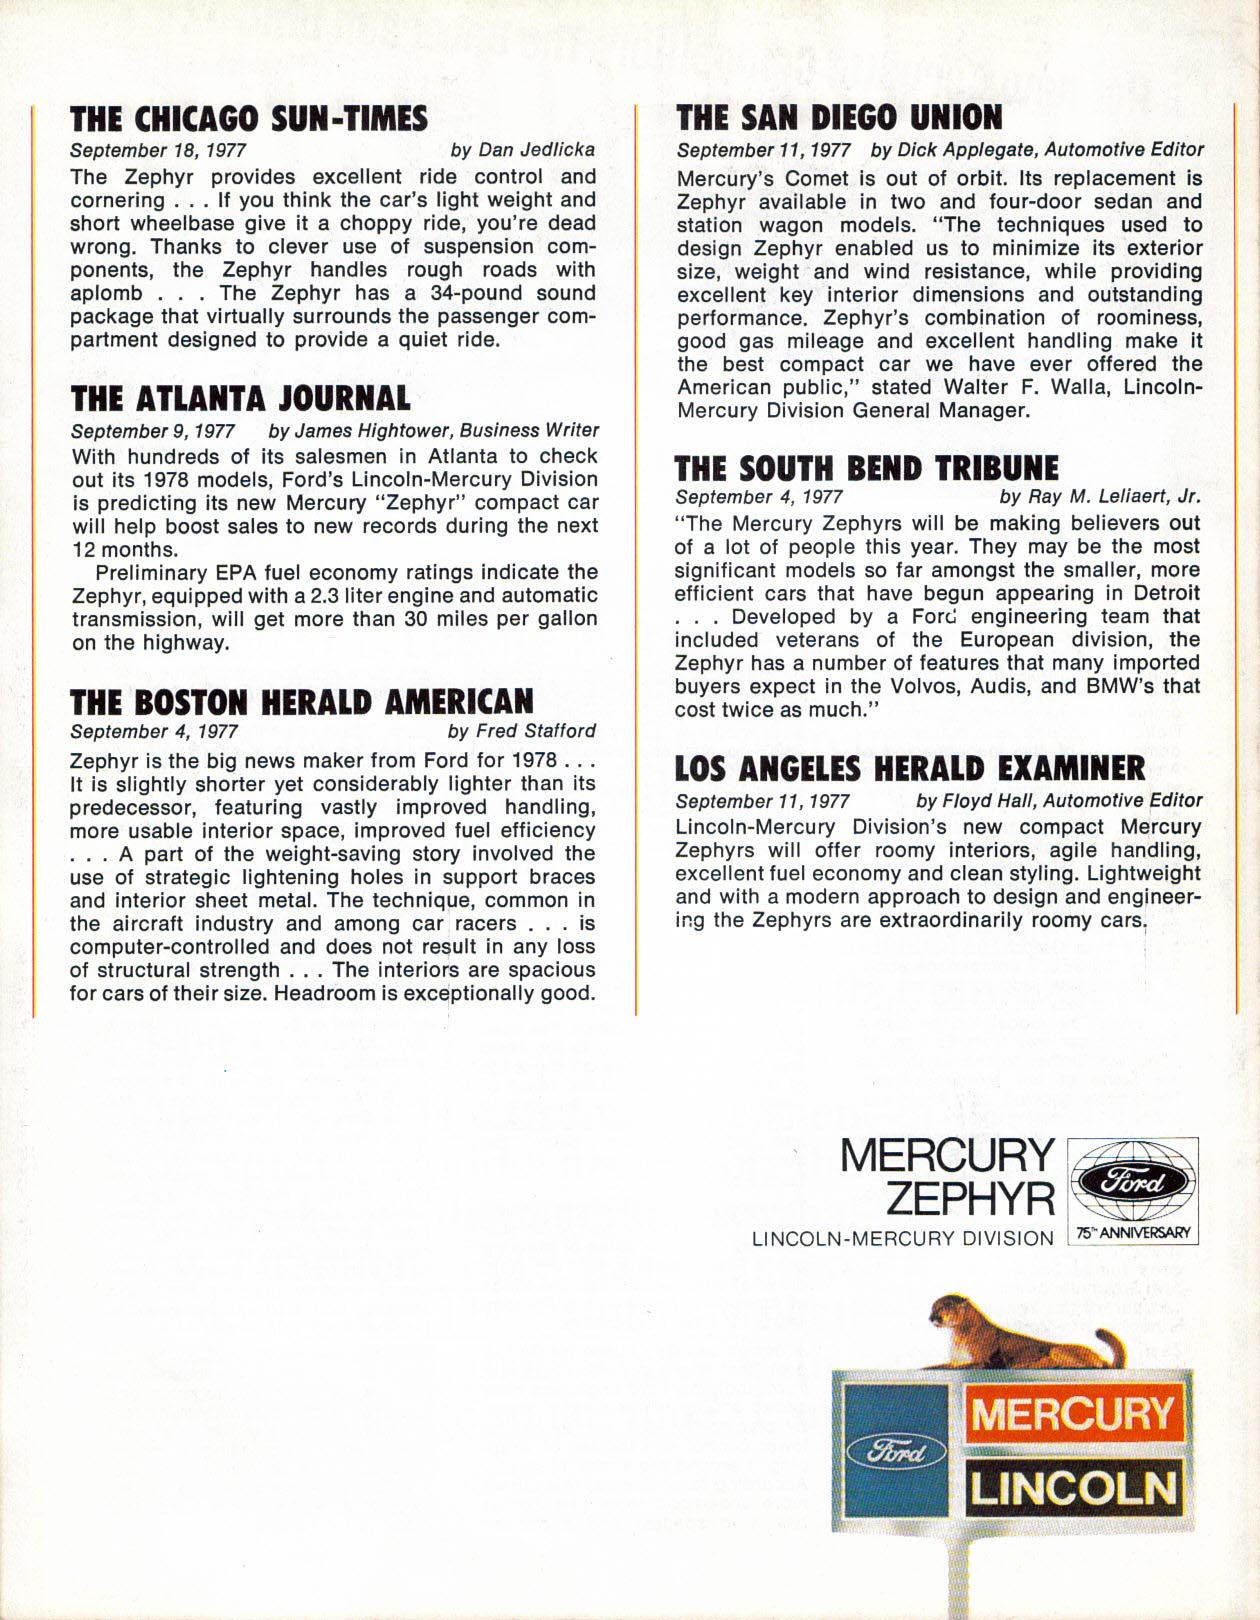 1978 Mercury Zephyr News Brochure Page 2